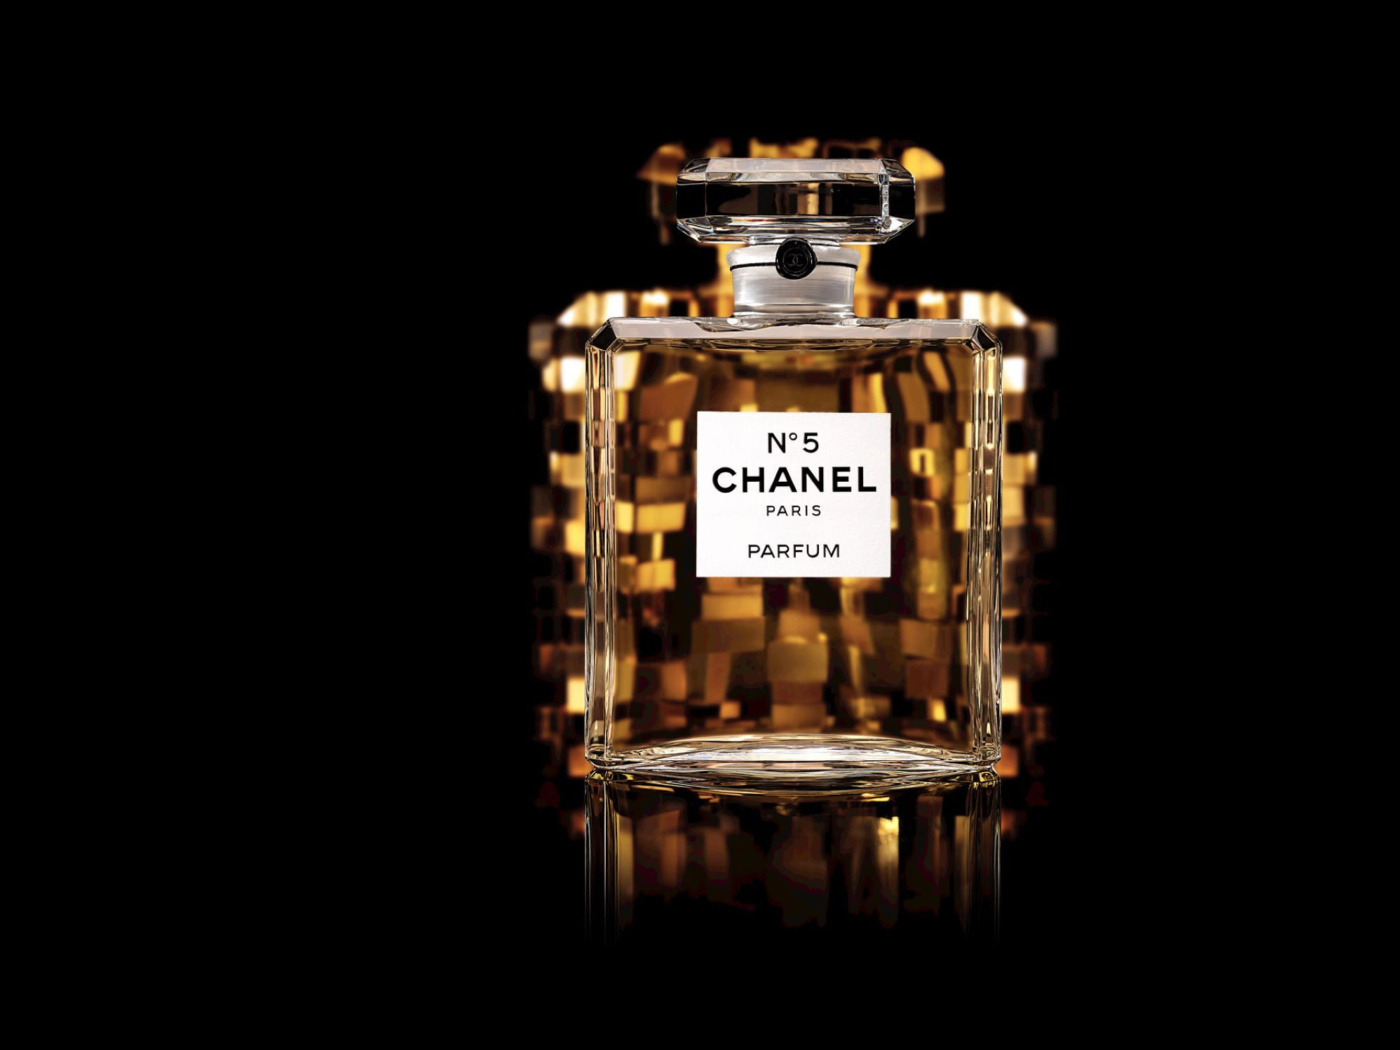 Das Chanel 5 Fragrance Perfume Wallpaper 1400x1050